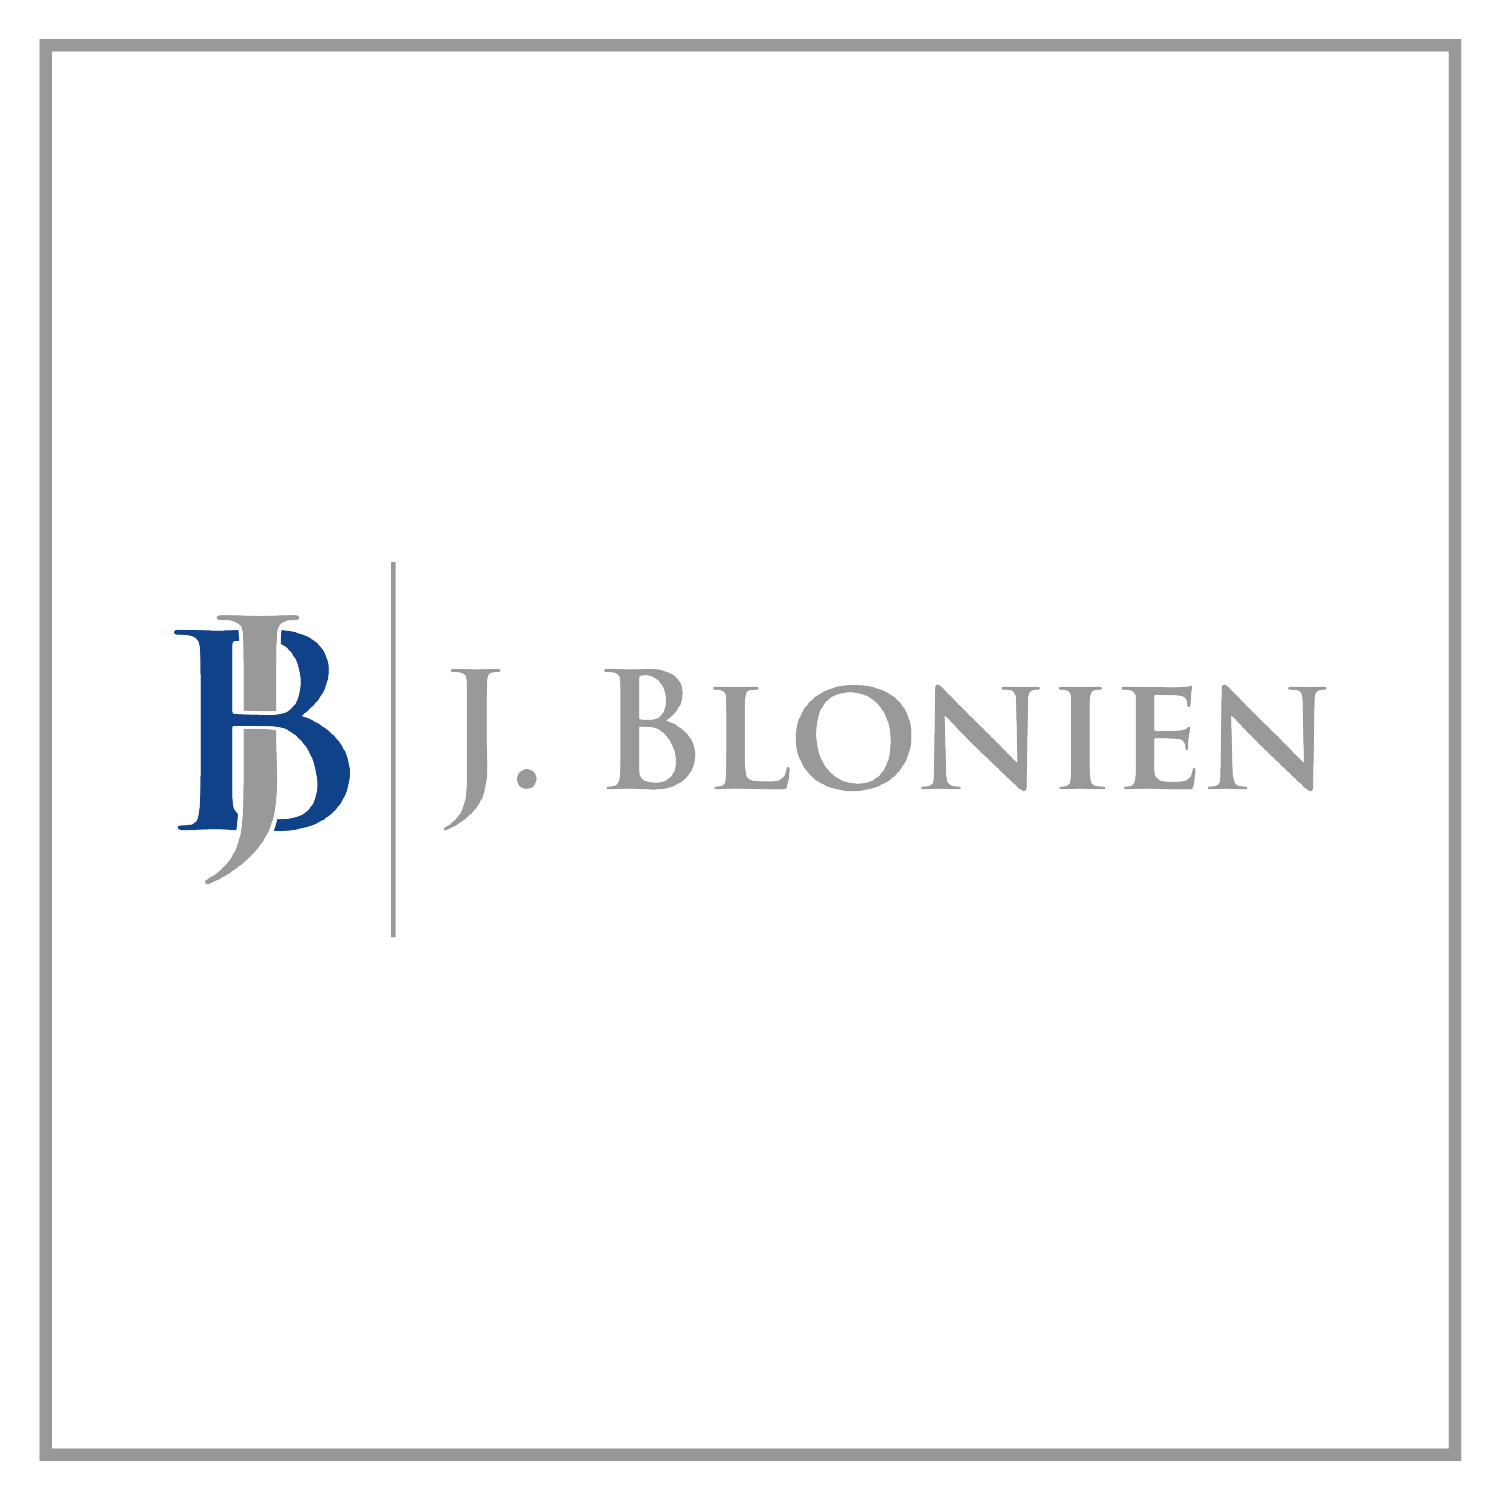 J. Blonien logo